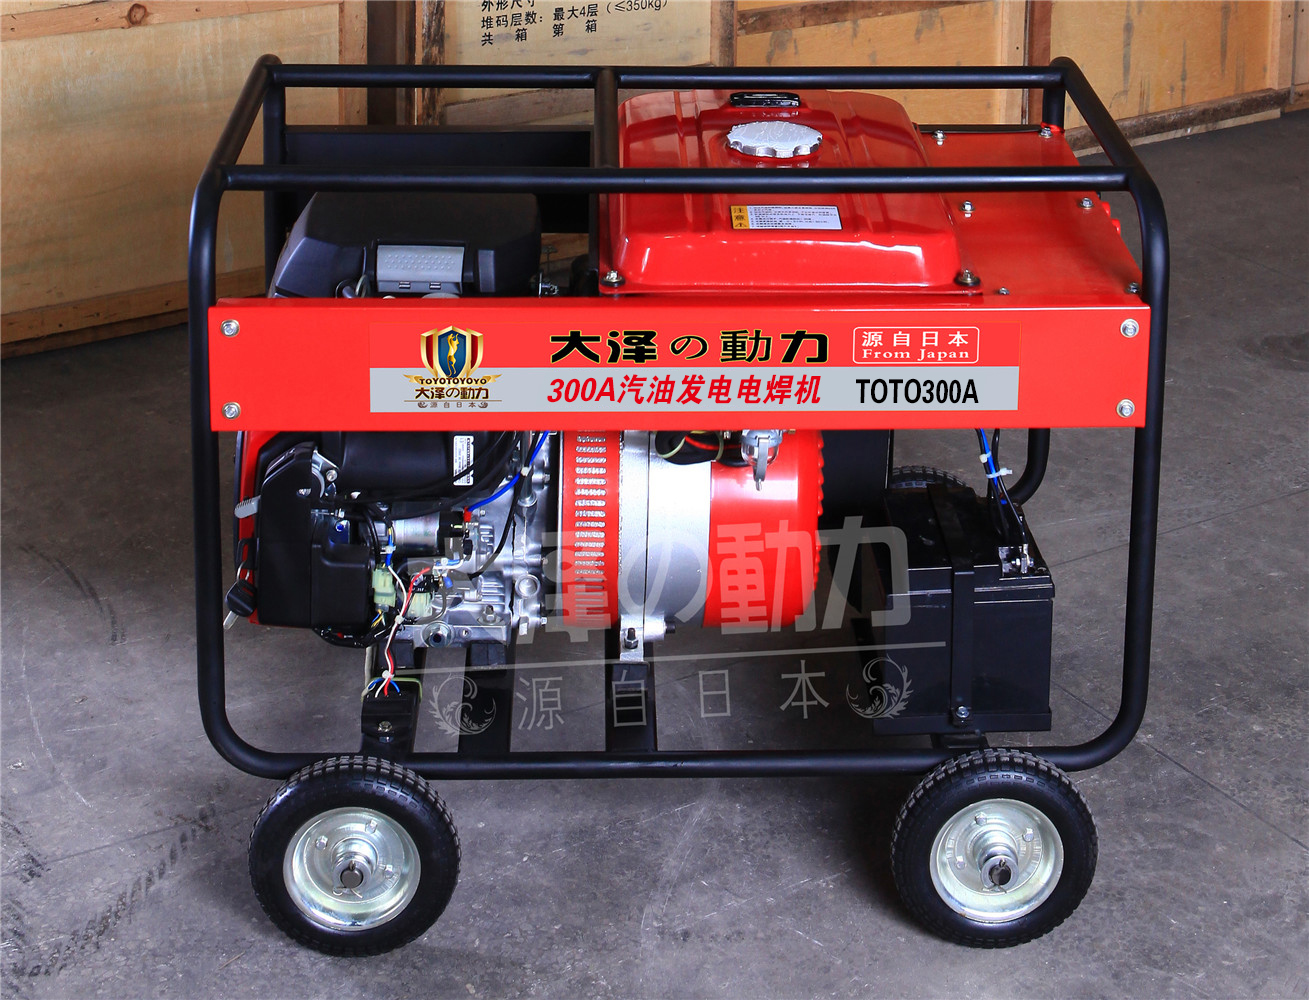 300A汽油焊机TOTO300A (2)